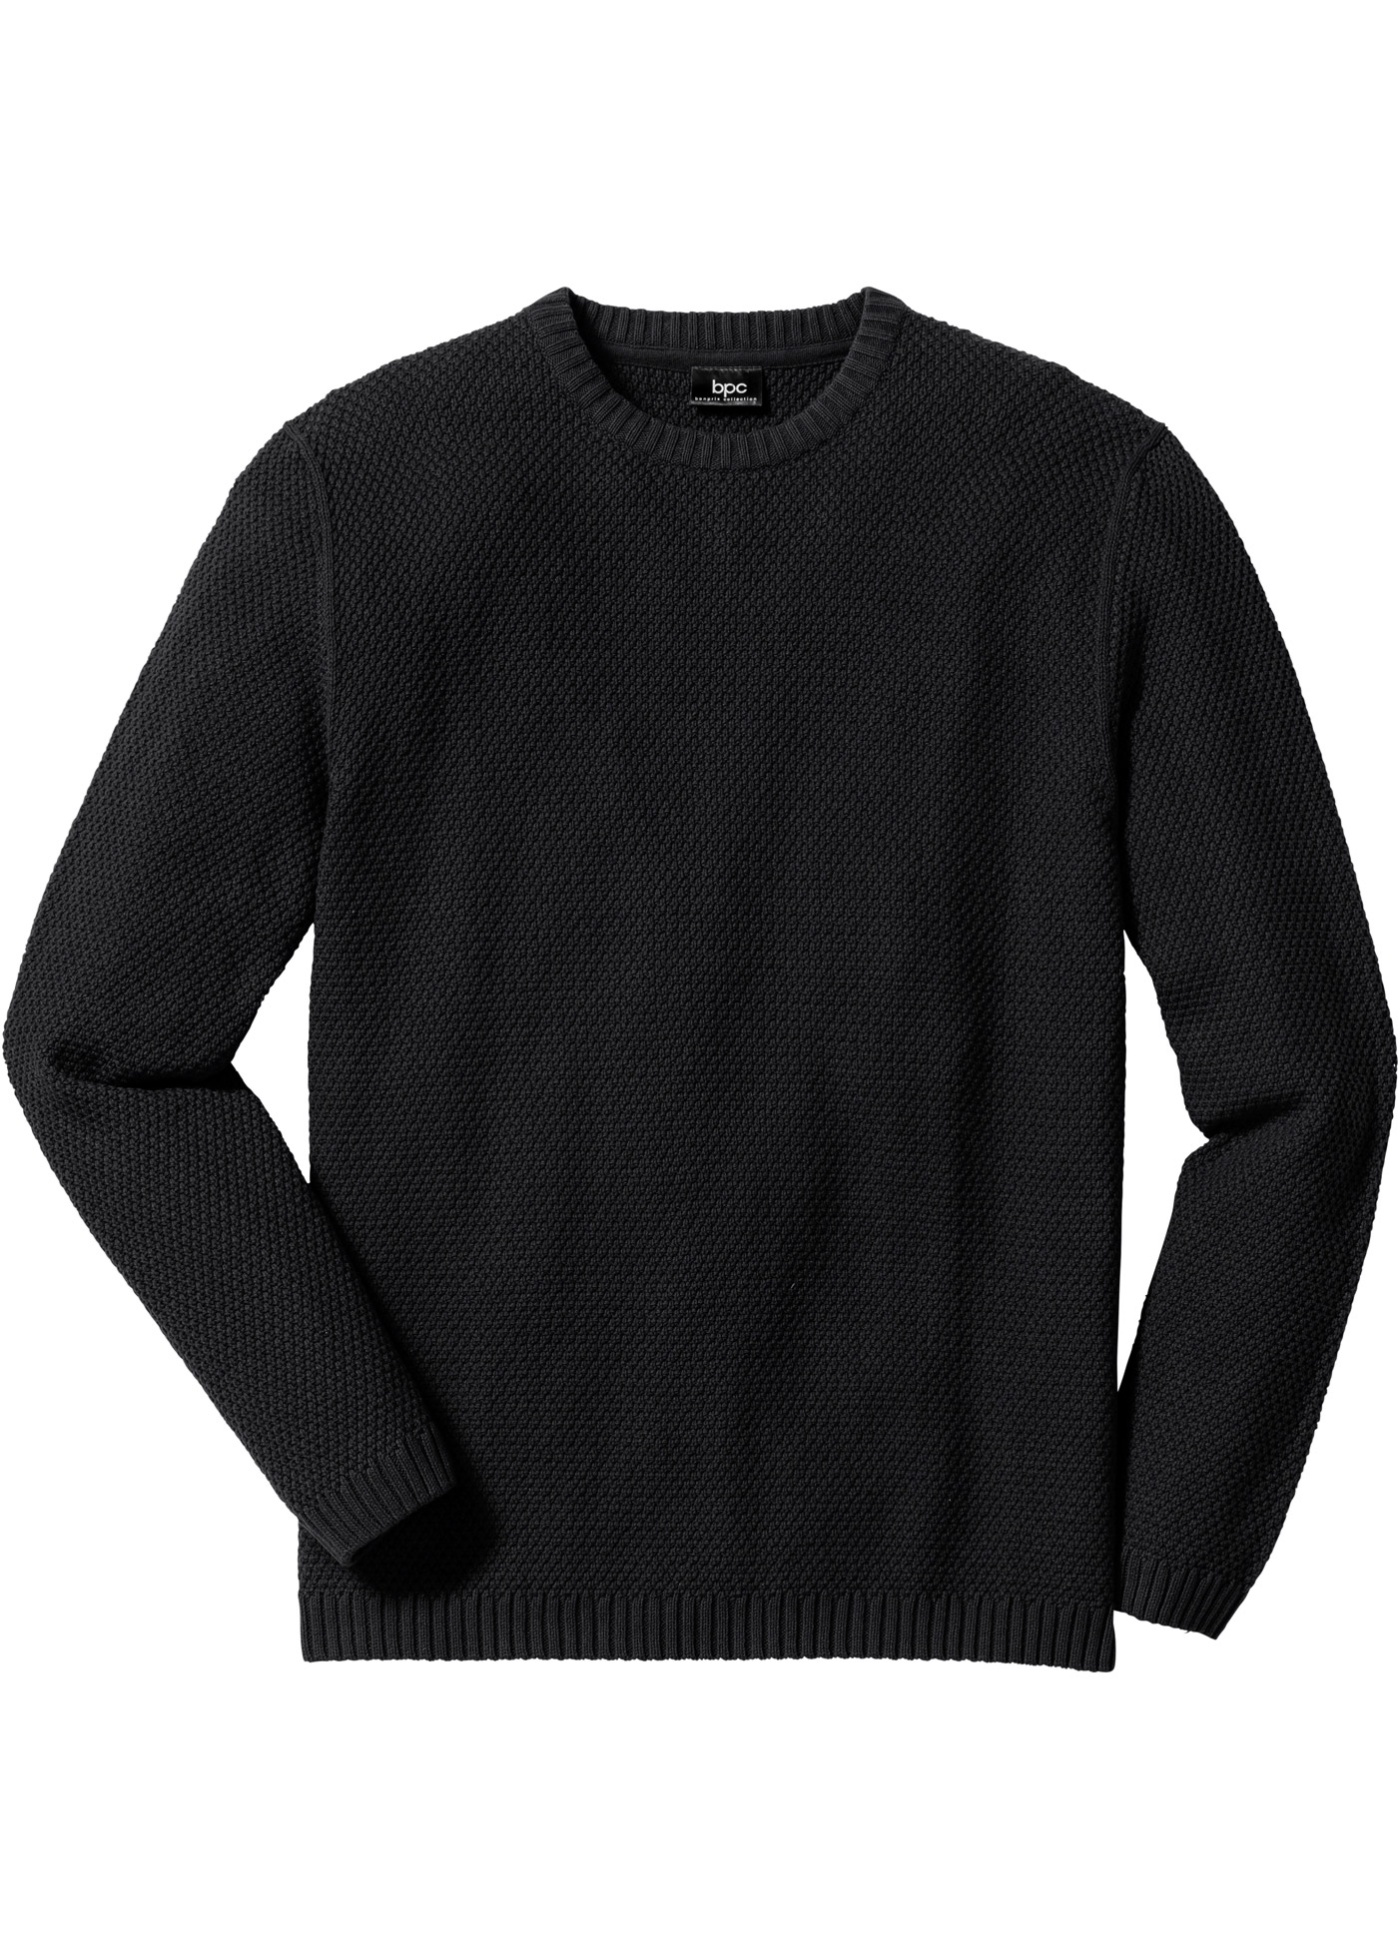 Pullover regular fit (Nero) - bpc bonprix collection